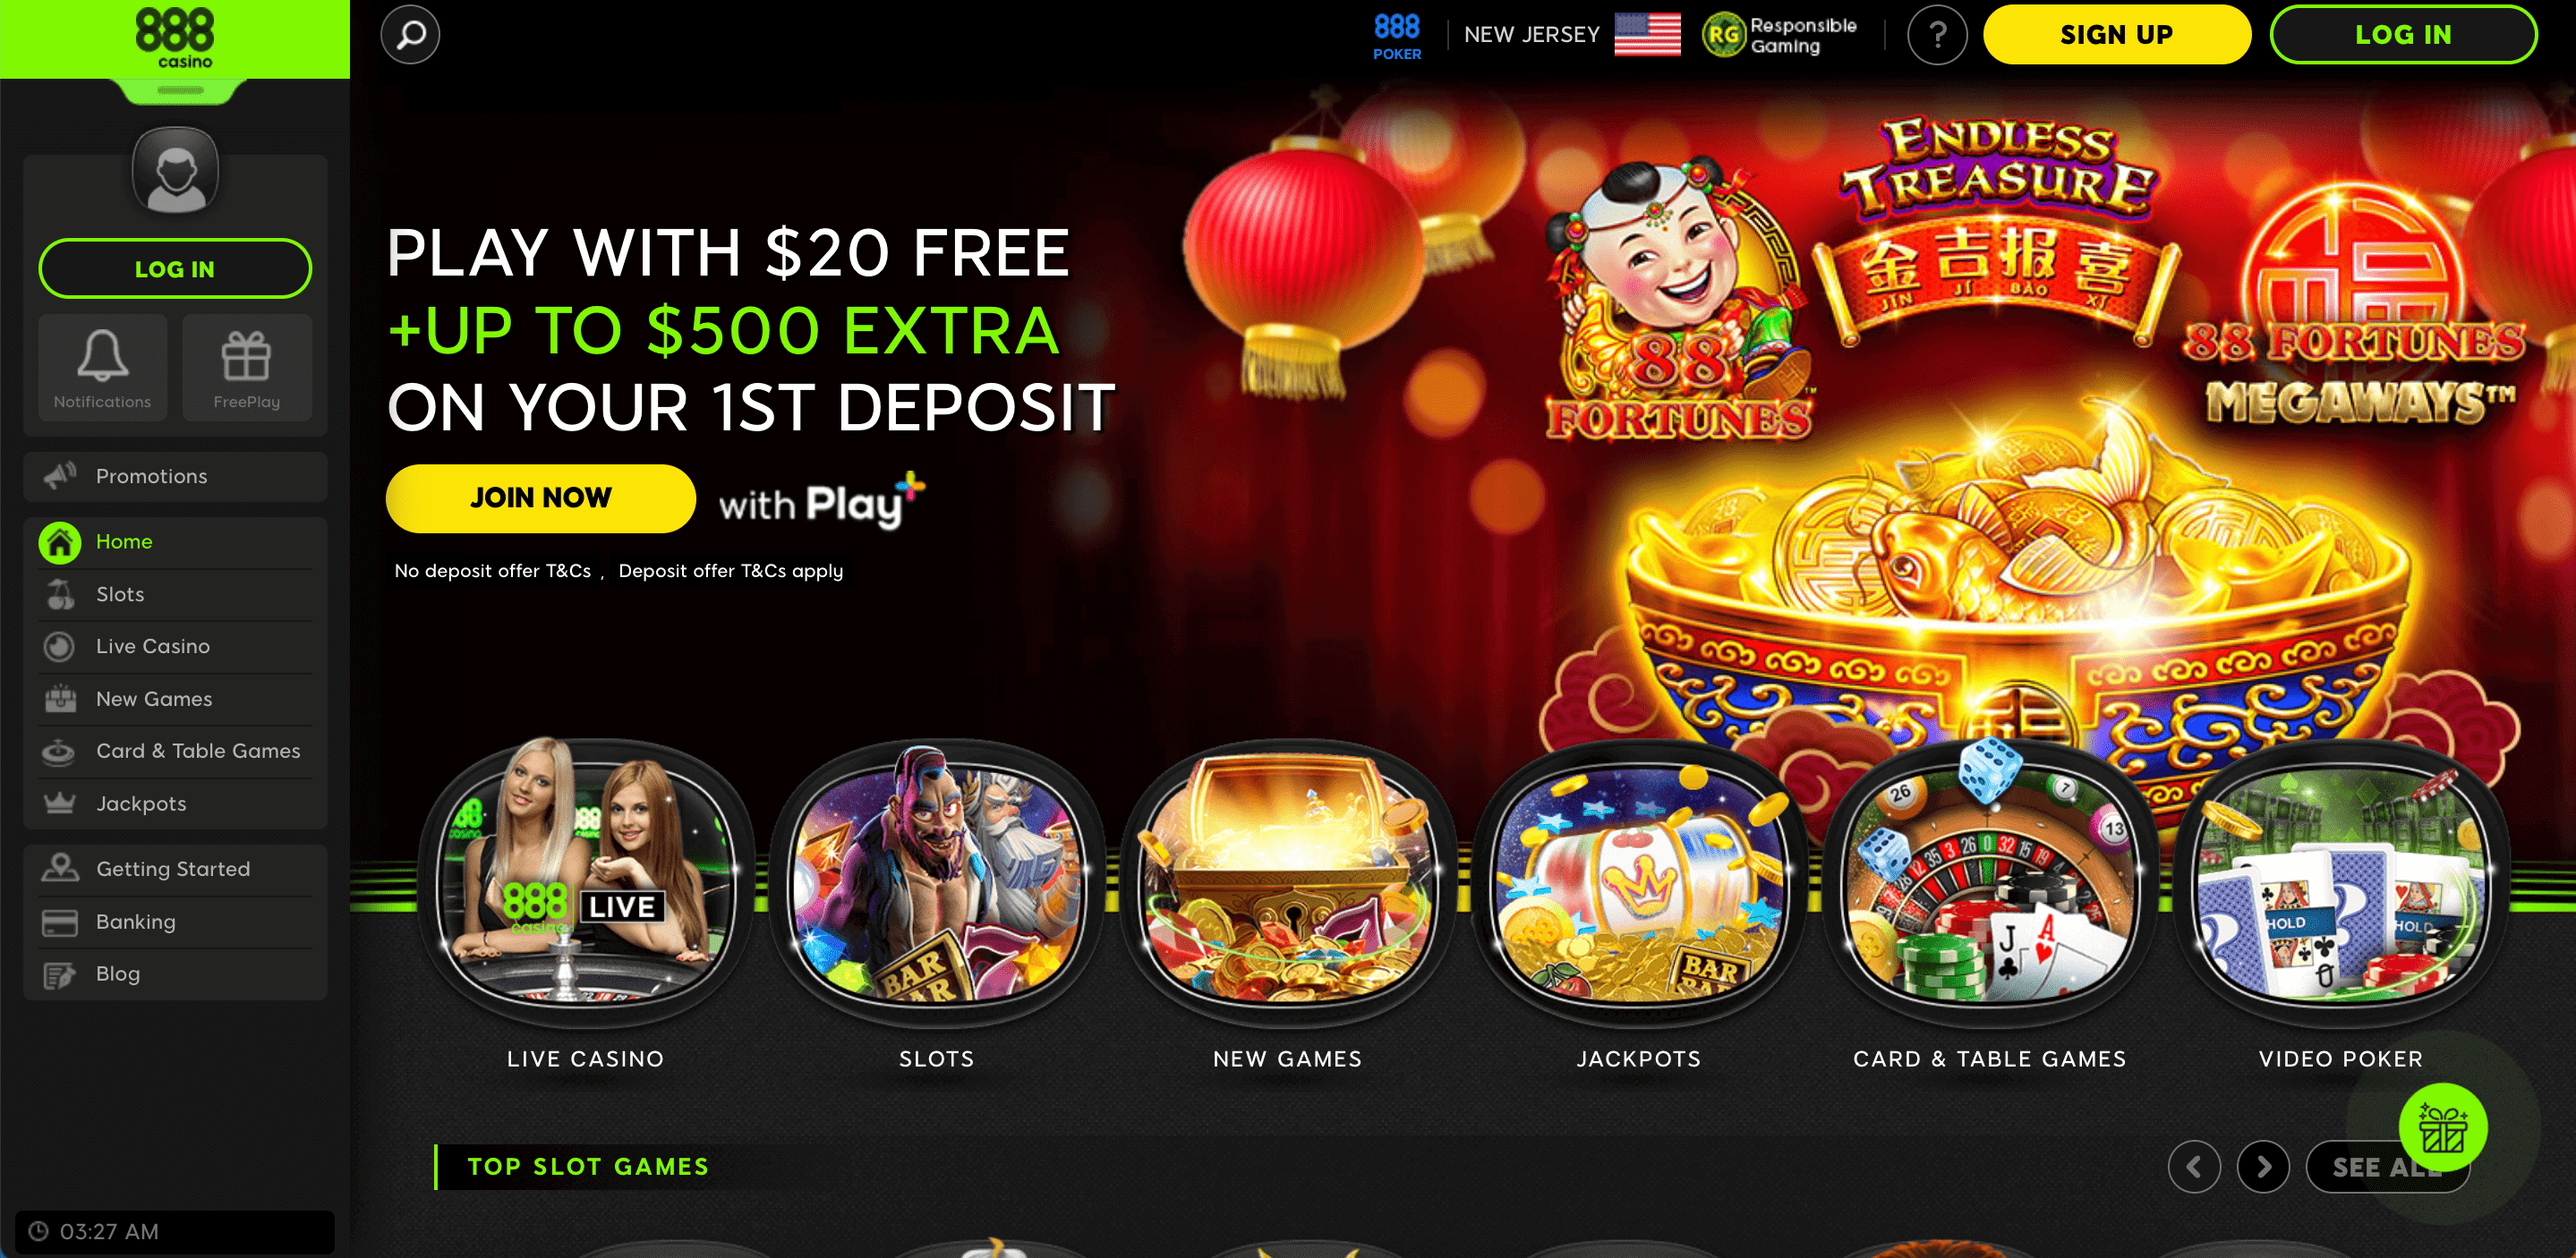 888 Casino NJ Home Page